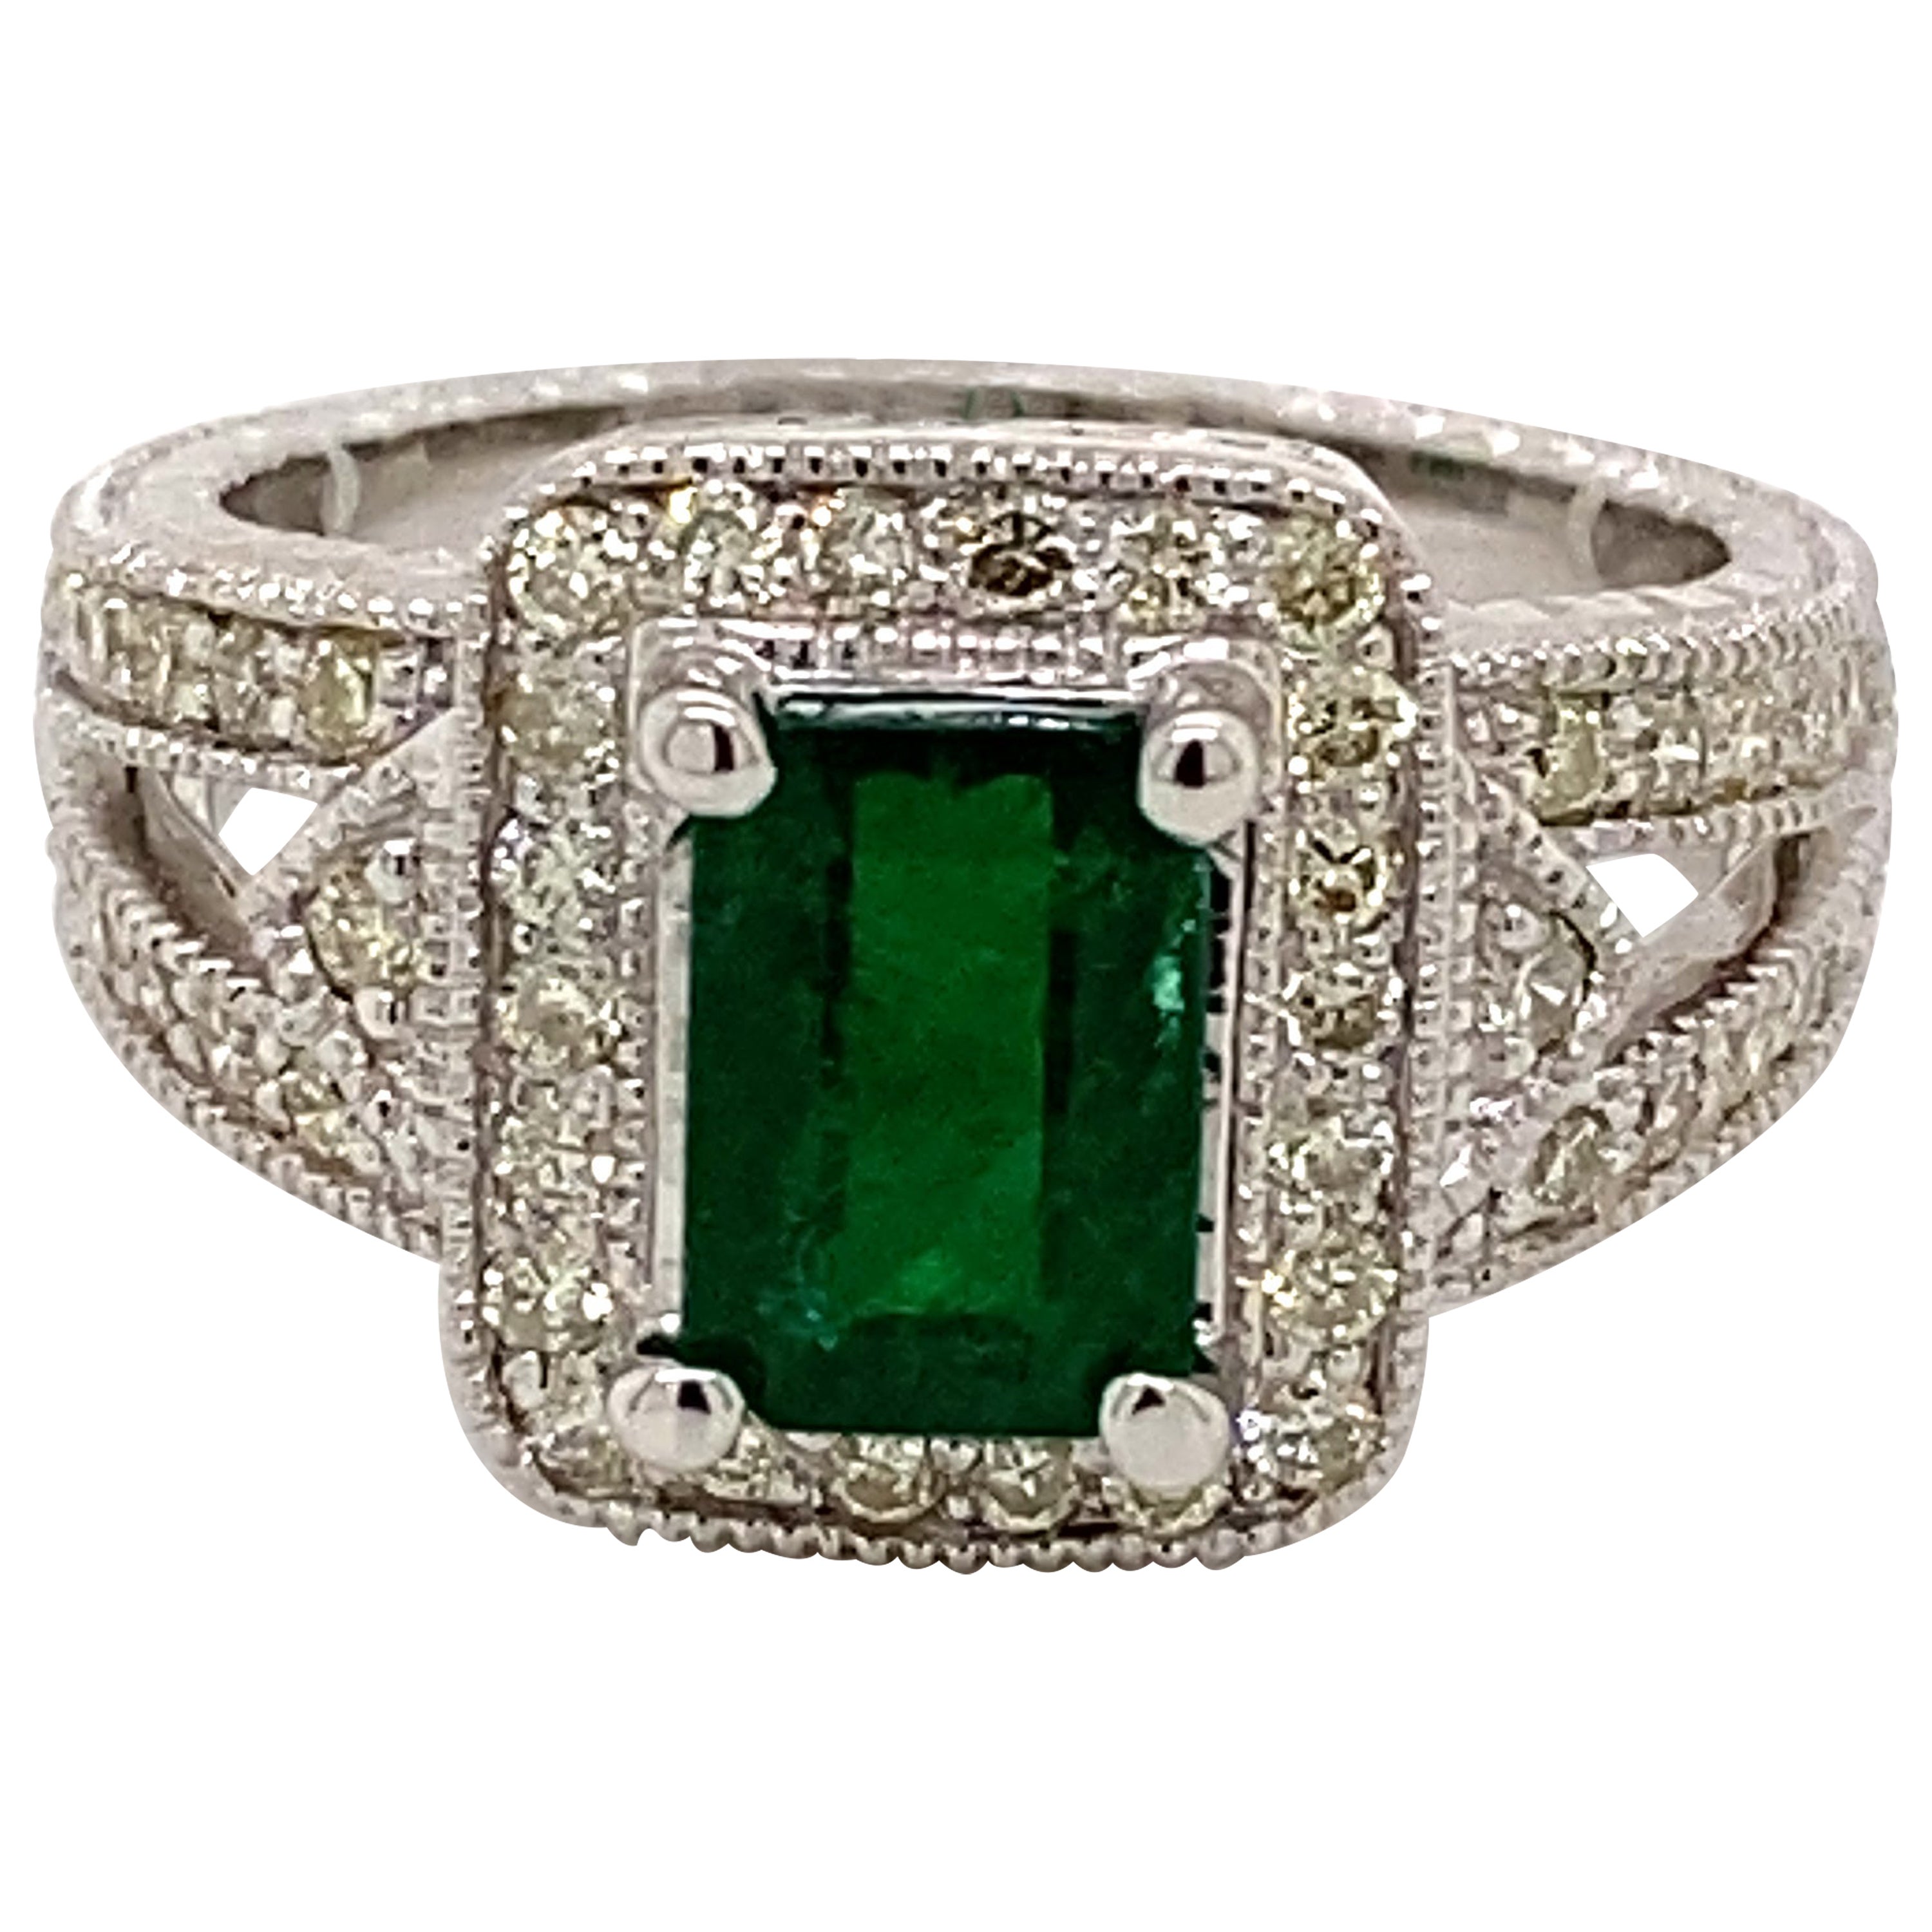 Art Deco Style 1.73ctt Emerald with Diamond Halo Ring 18k White Gold